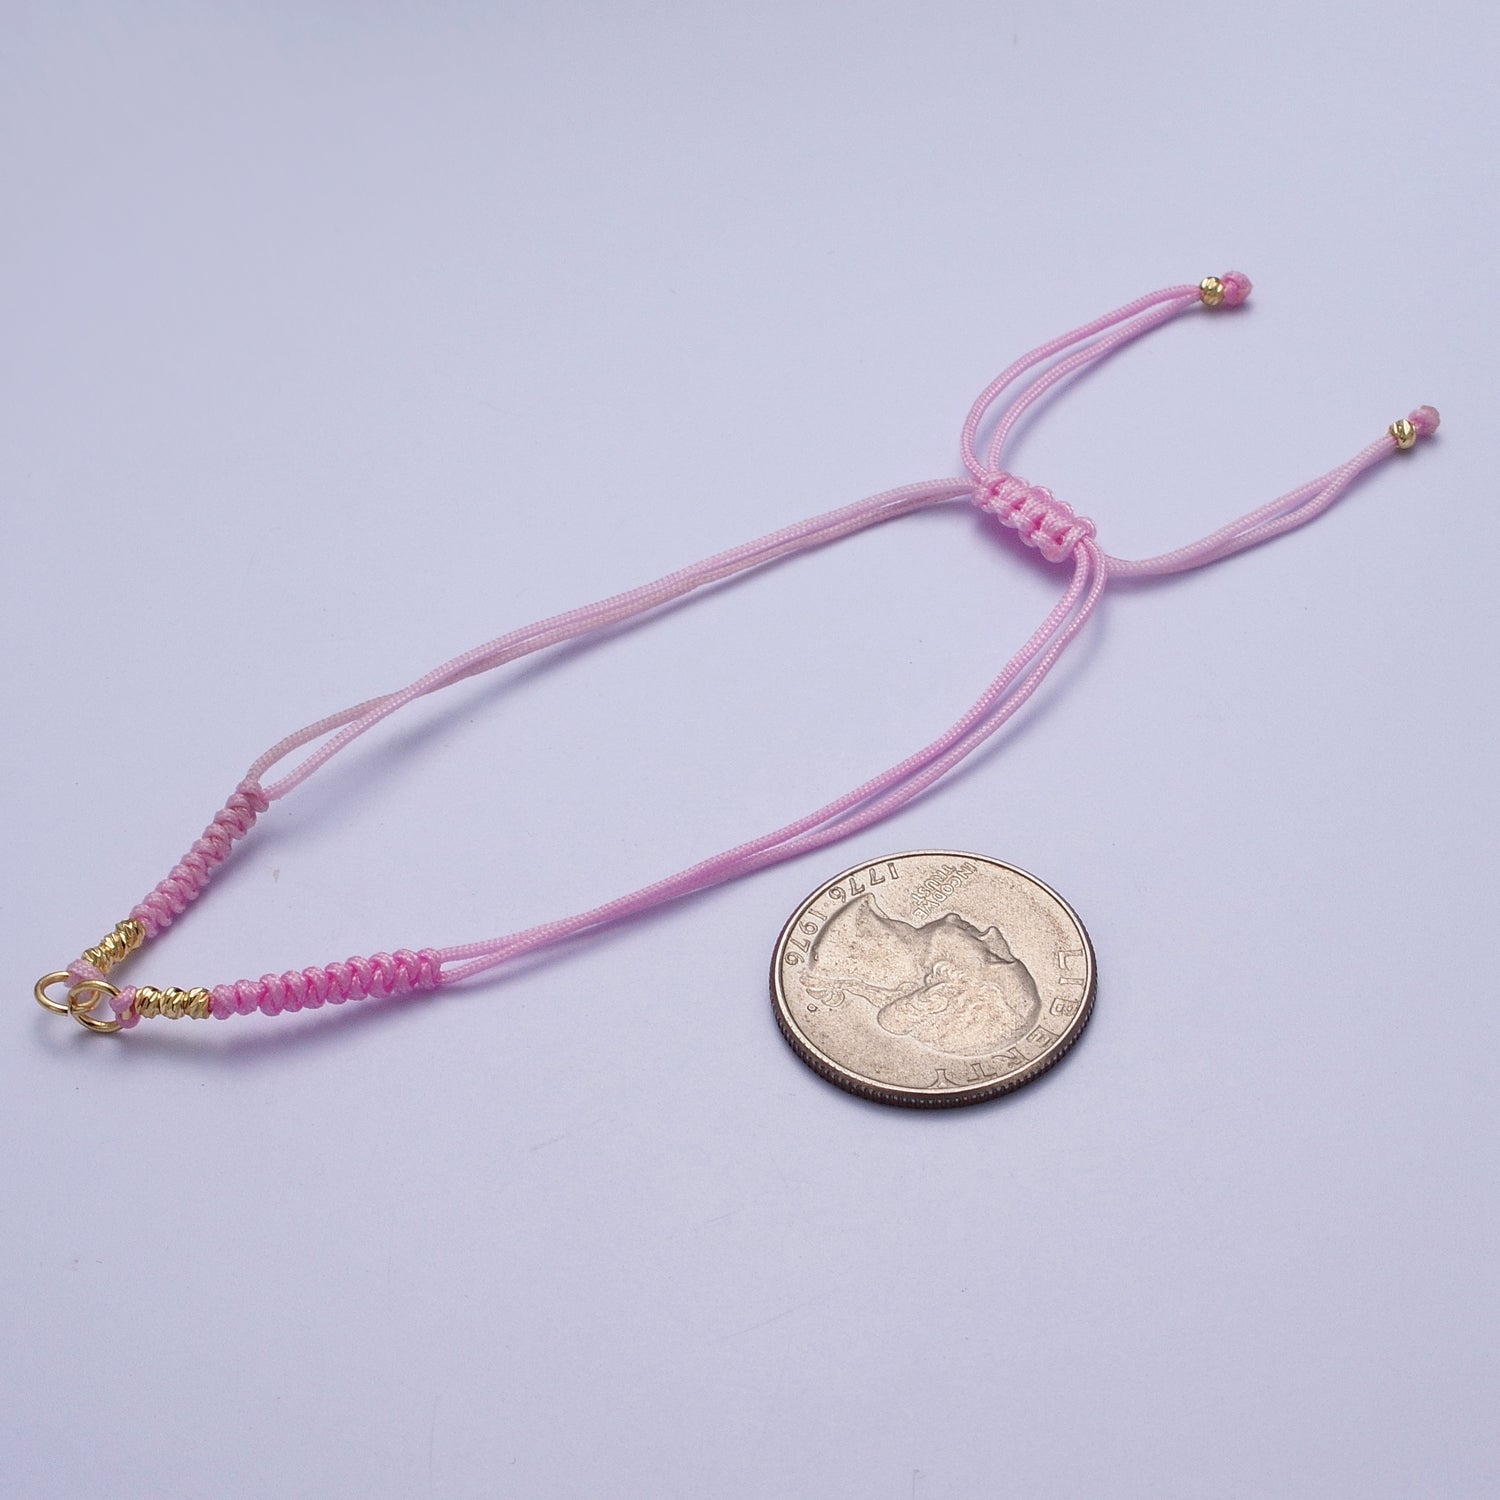 Minimalist Fabric Knot Pink/White Bracelet Making Supply Jewelry Component | K021 L936 - DLUXCA